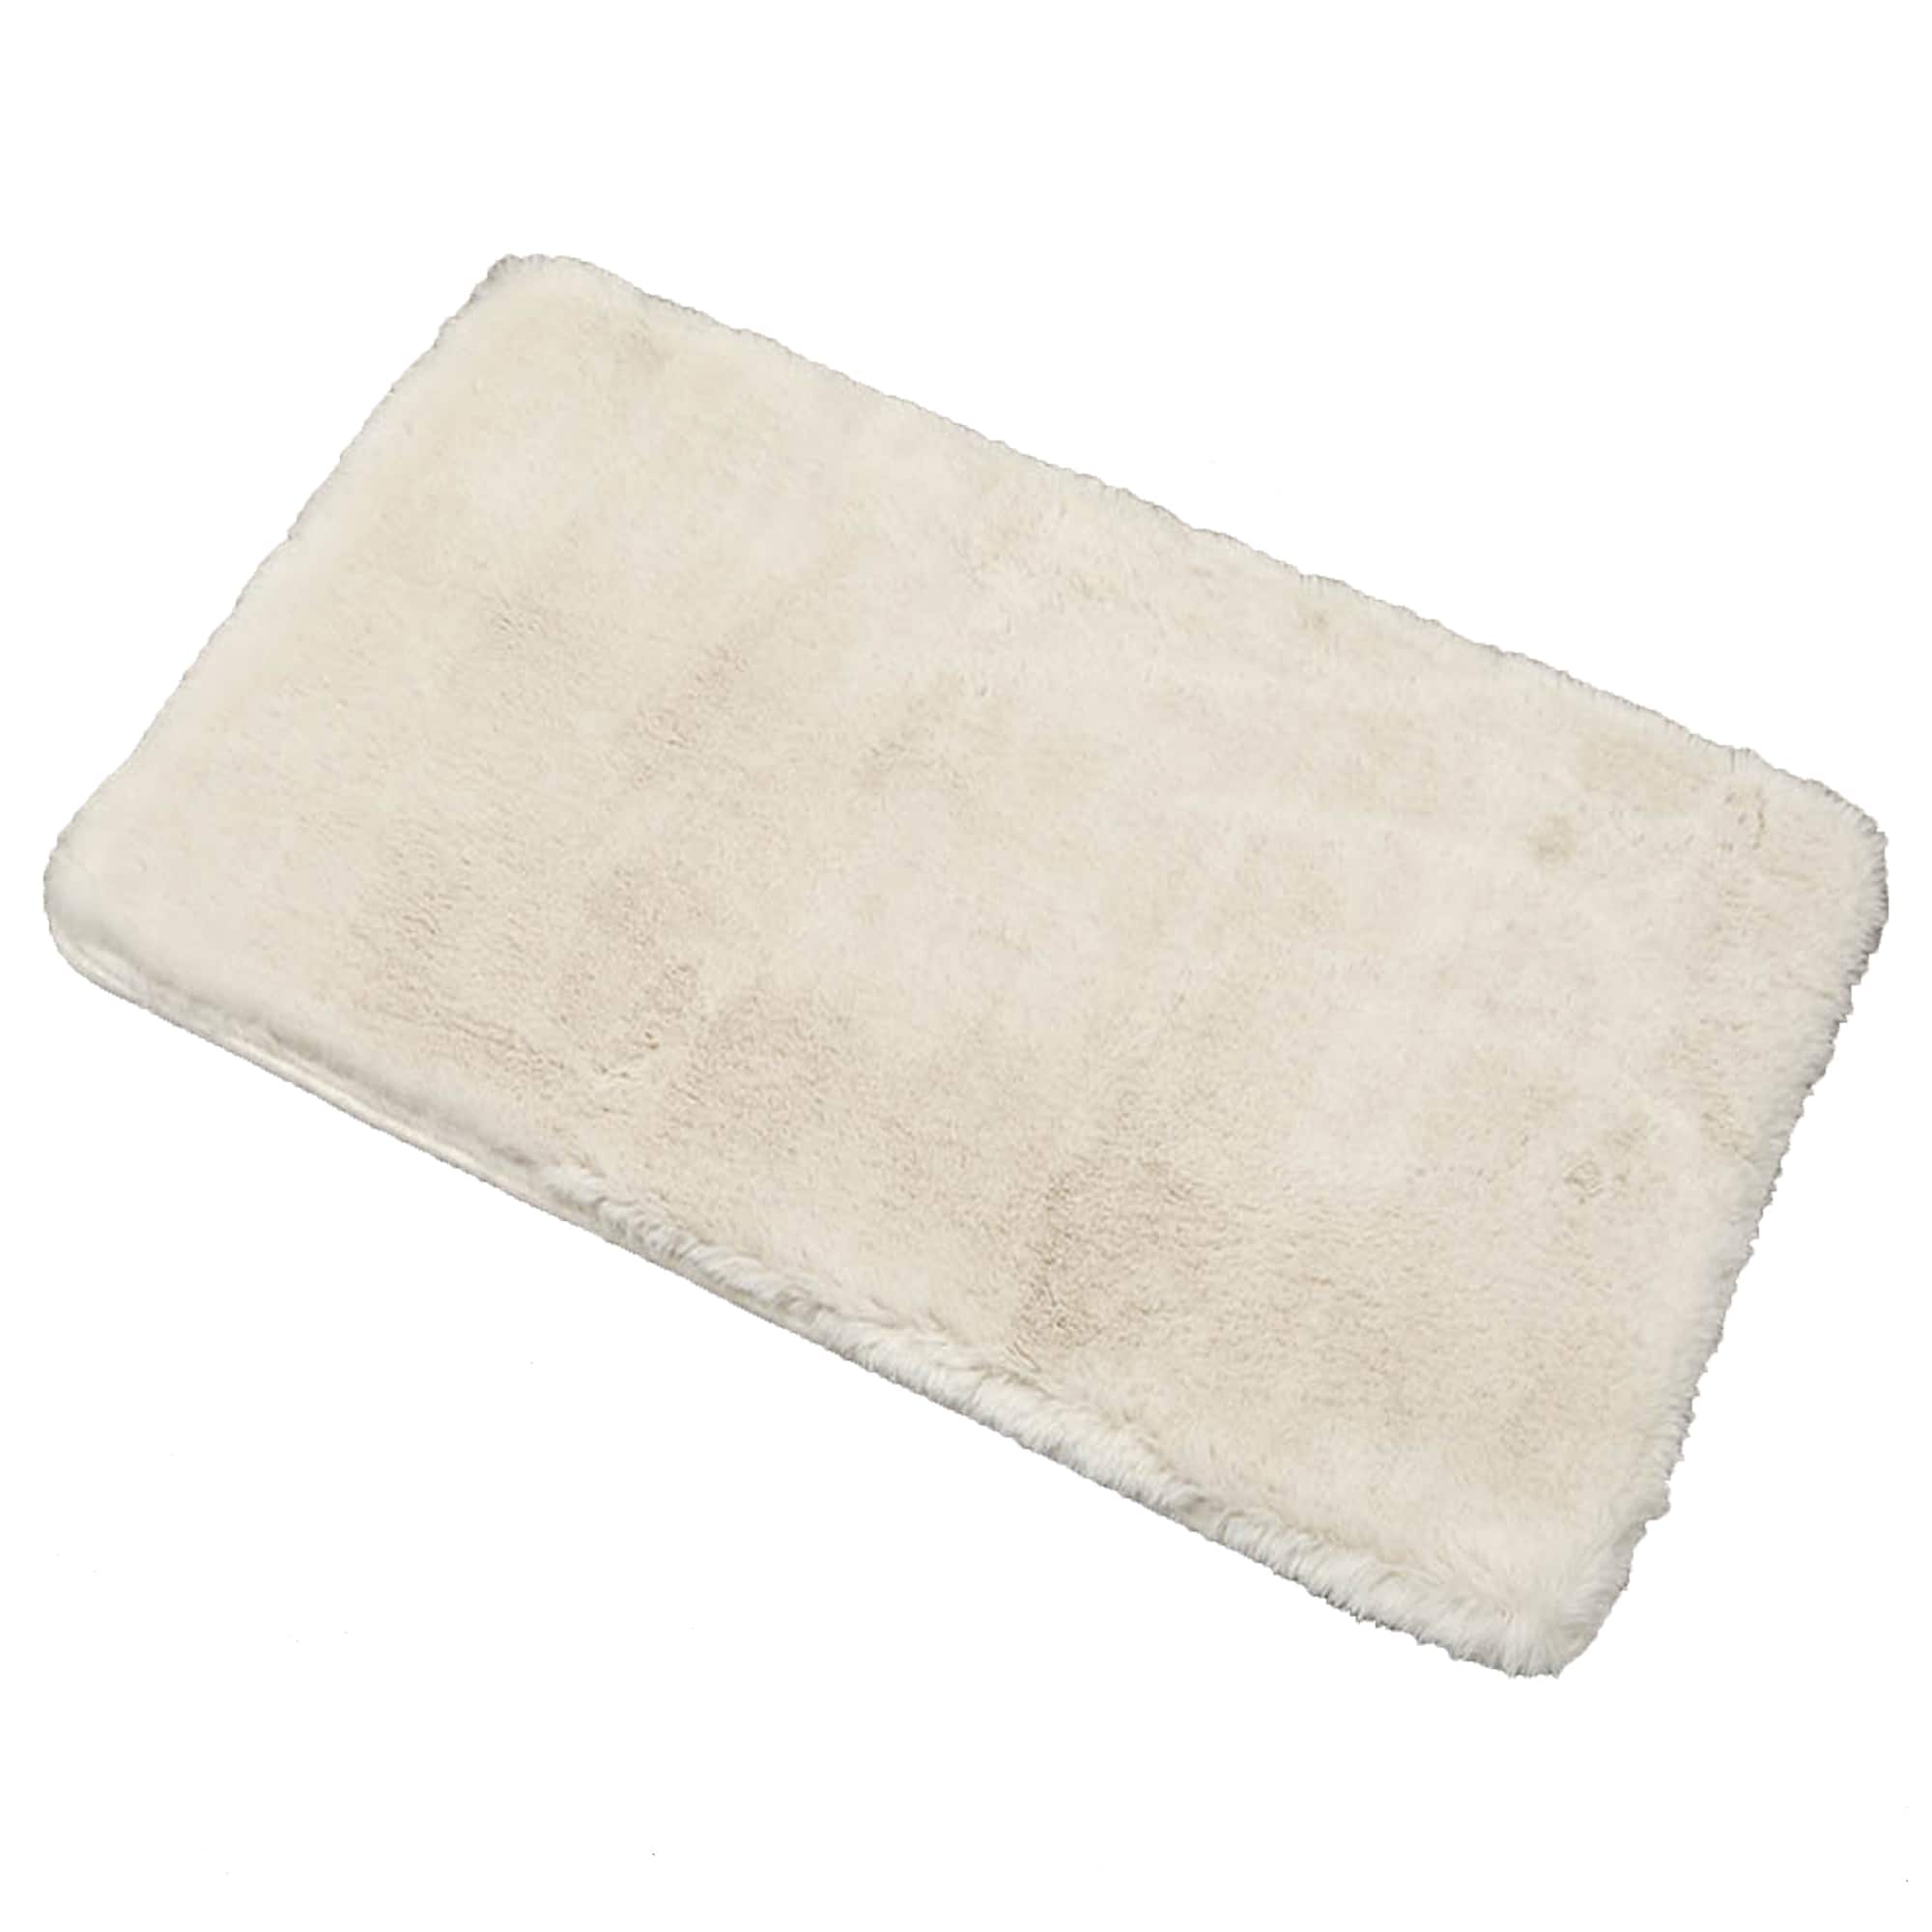 super soft bath mat plush effect in beige color